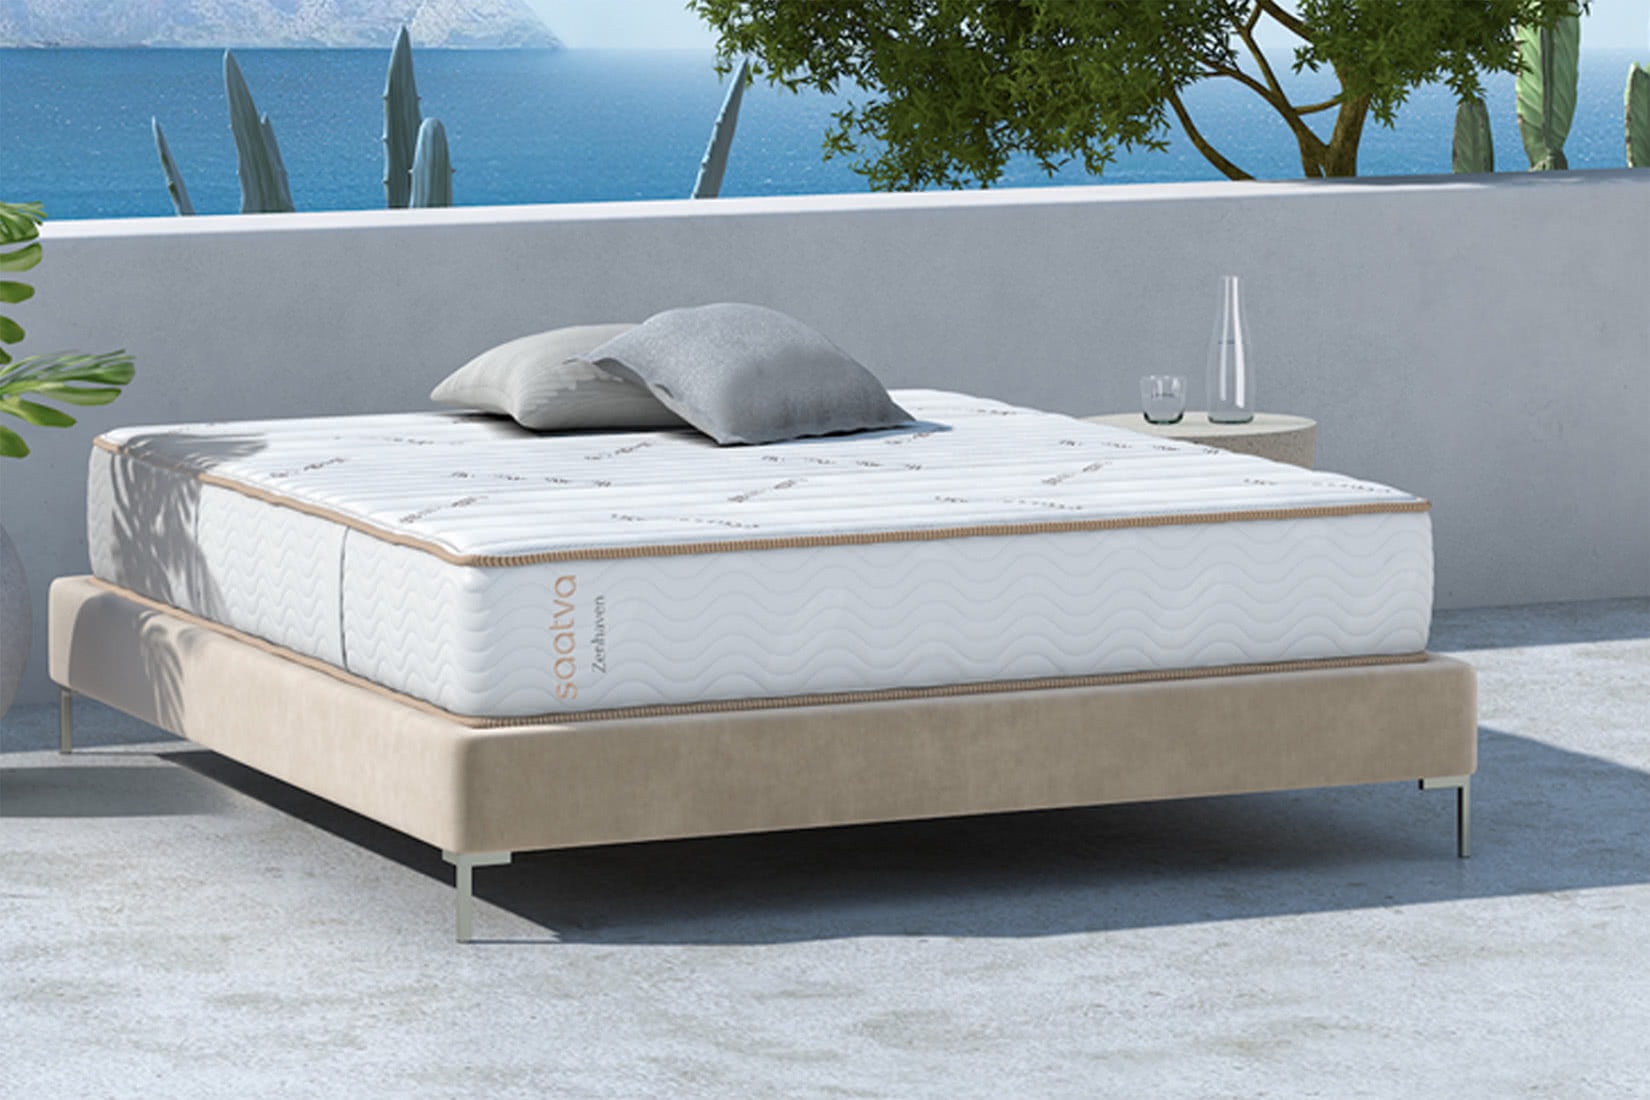 Zenhavean luxury mattress review - Luxe Digital